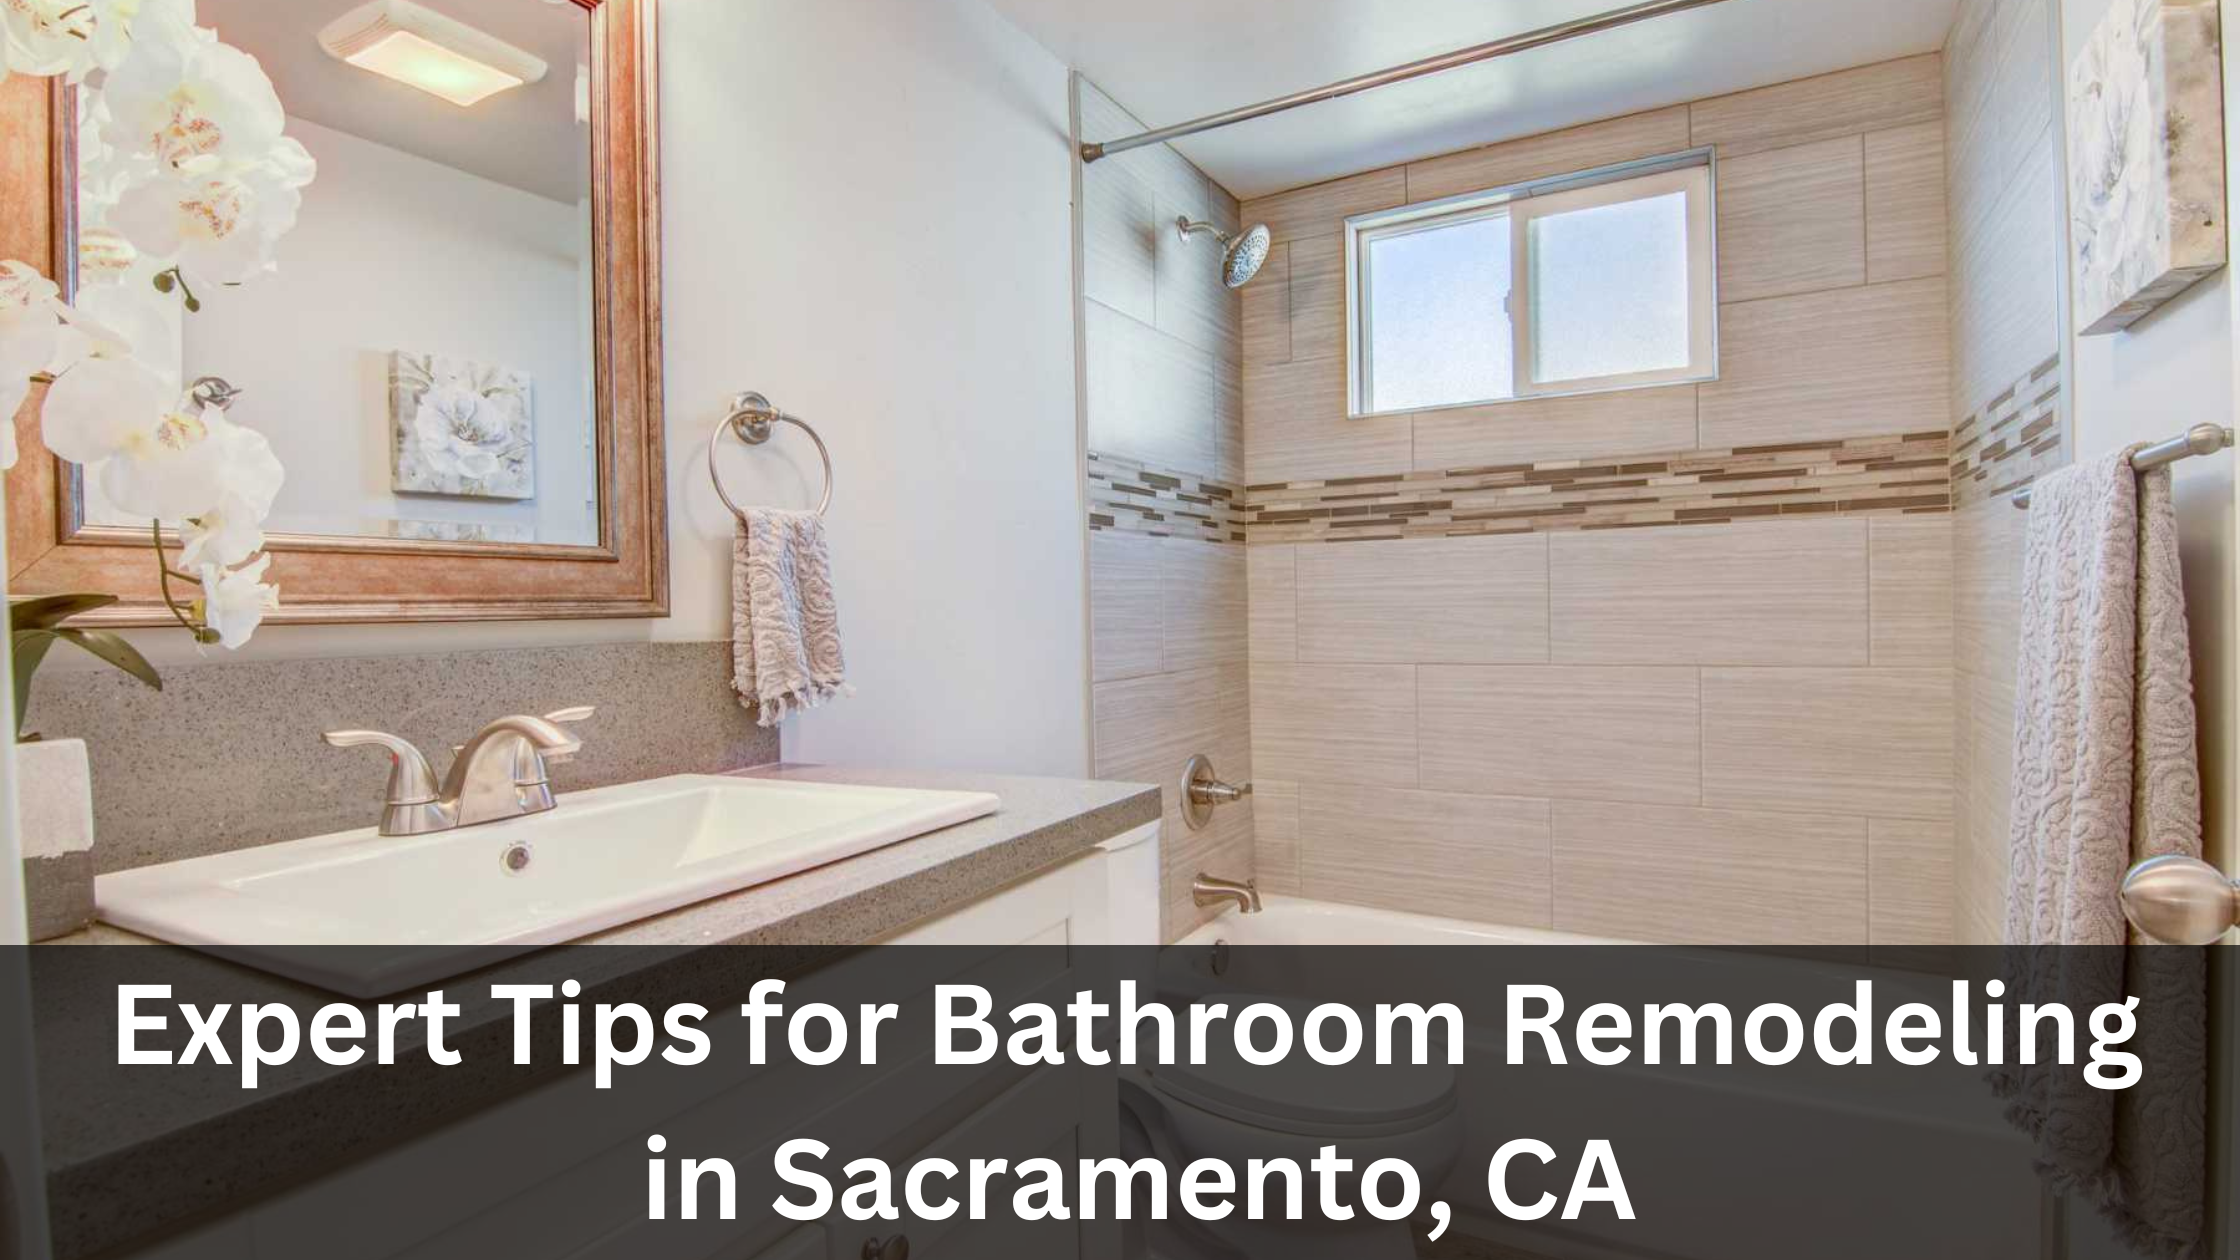 Expert Tips for Bathroom Remodeling in Sacramento, CA